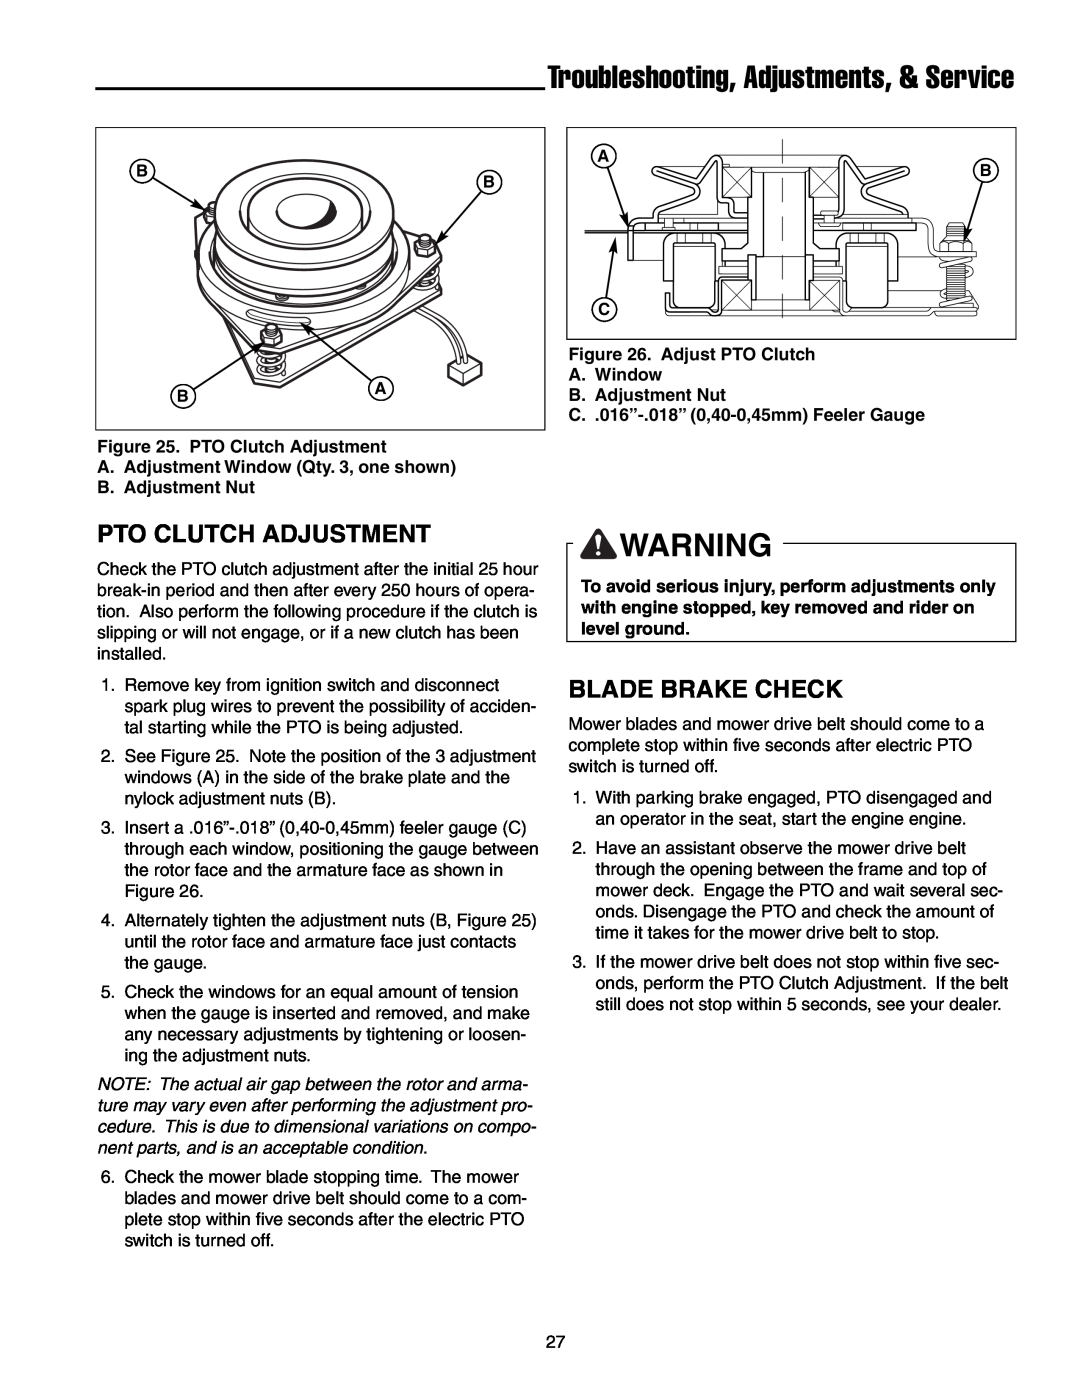 Snapper ERZT20441BVE2 manual Pto Clutch Adjustment, Blade Brake Check, Troubleshooting, Adjustments, & Service 